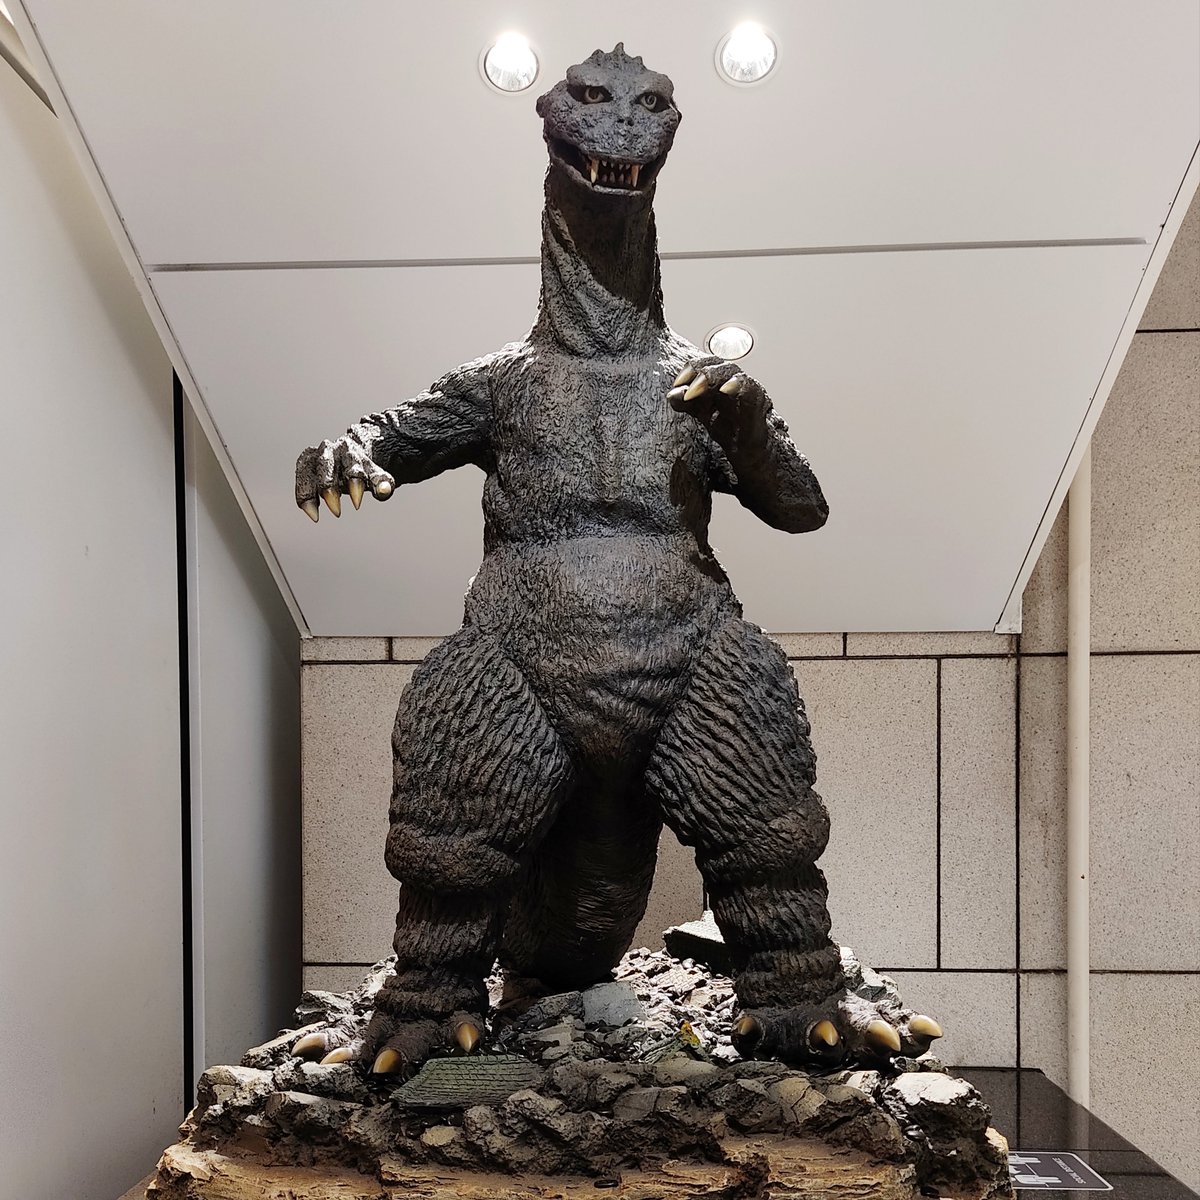 A statue of Godzilla from 'Godzilla Raids Again' (1955) is now on display at Shinsaibashi Parco in Osaka.